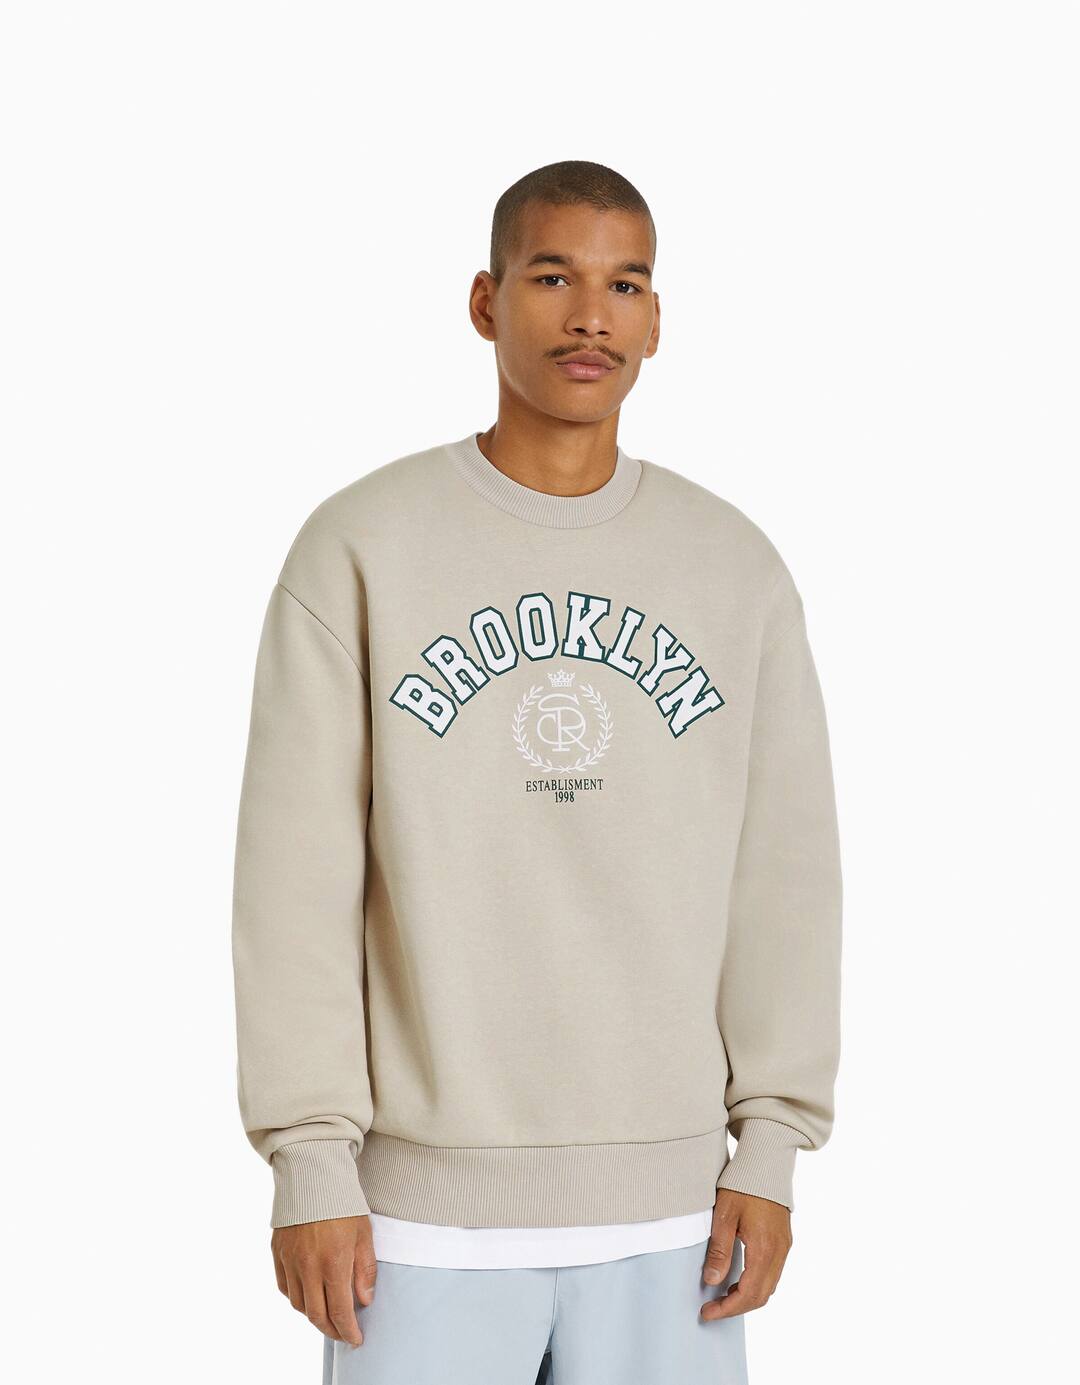 Brooklyn print round neck sweatshirt